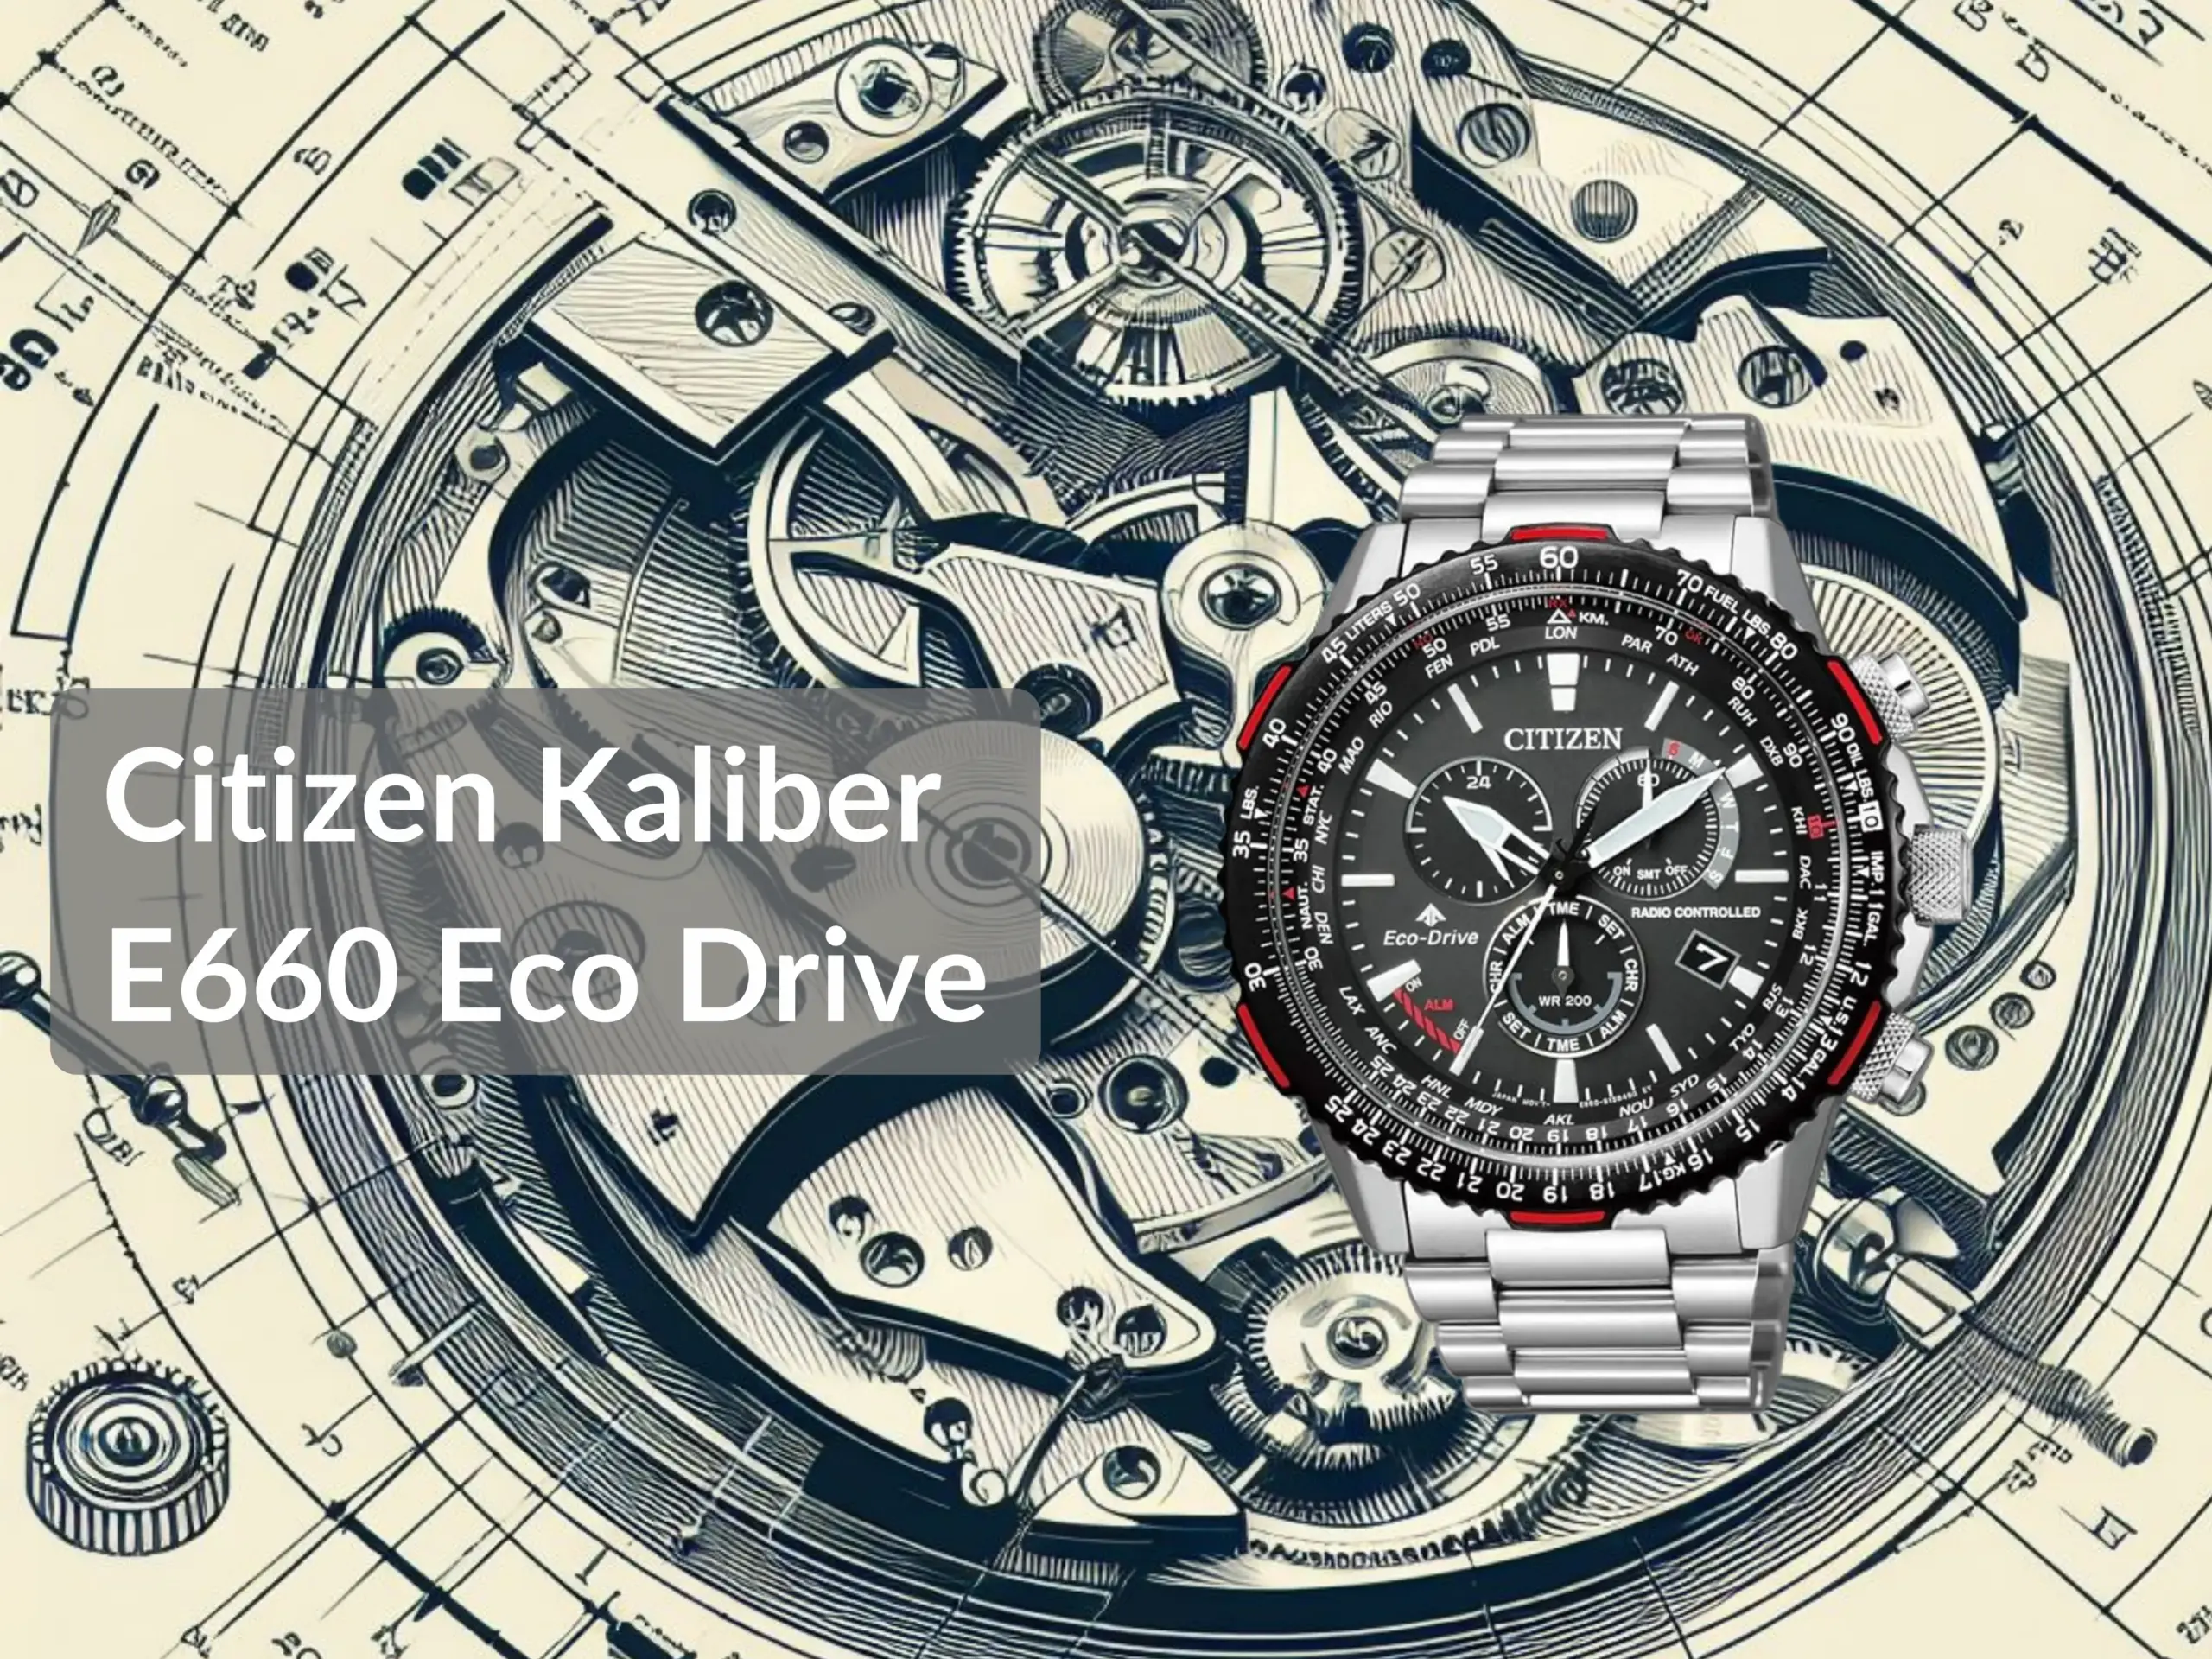 Citizen Eco Drive Kaliber E660